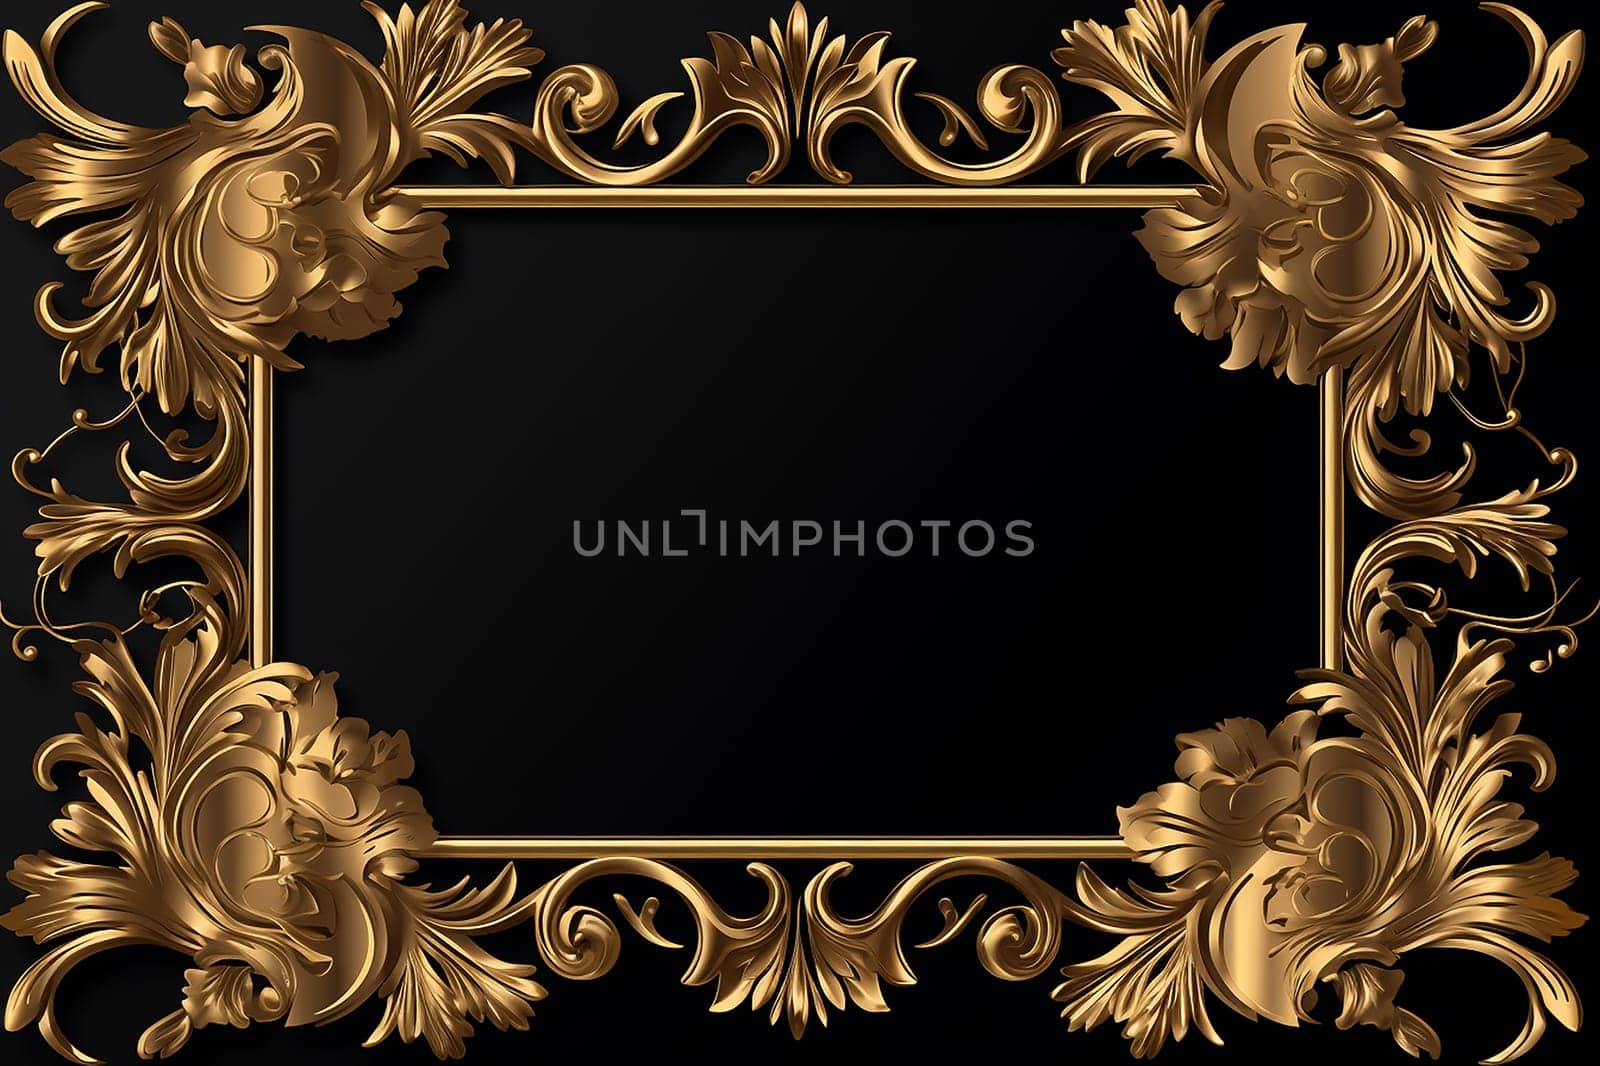 Elegant golden ornate frame on a dark background.